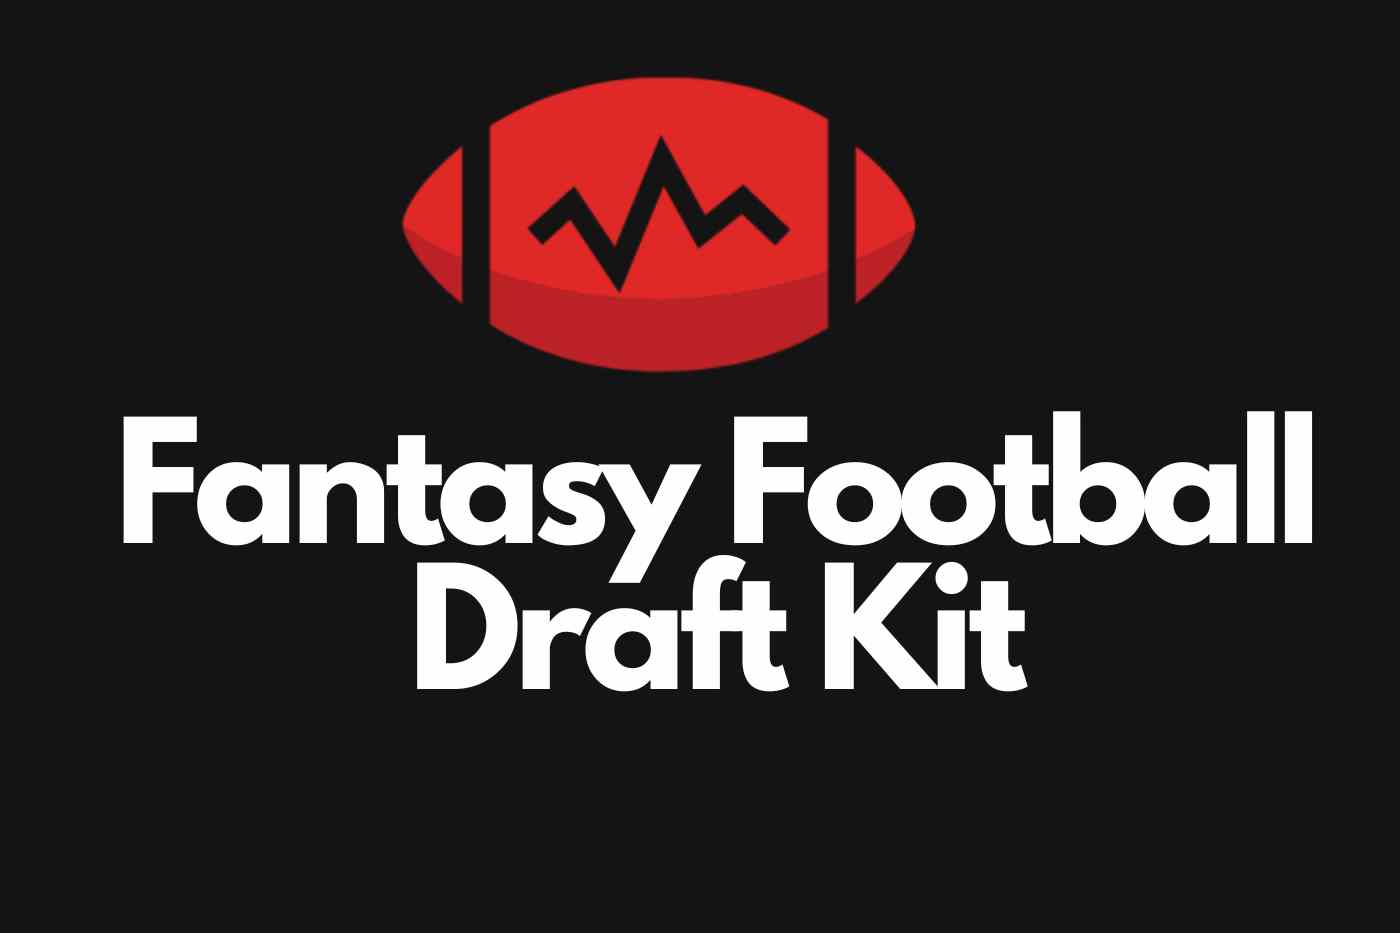 Adam Schefter's fantasy football cheat sheet - Value picks and